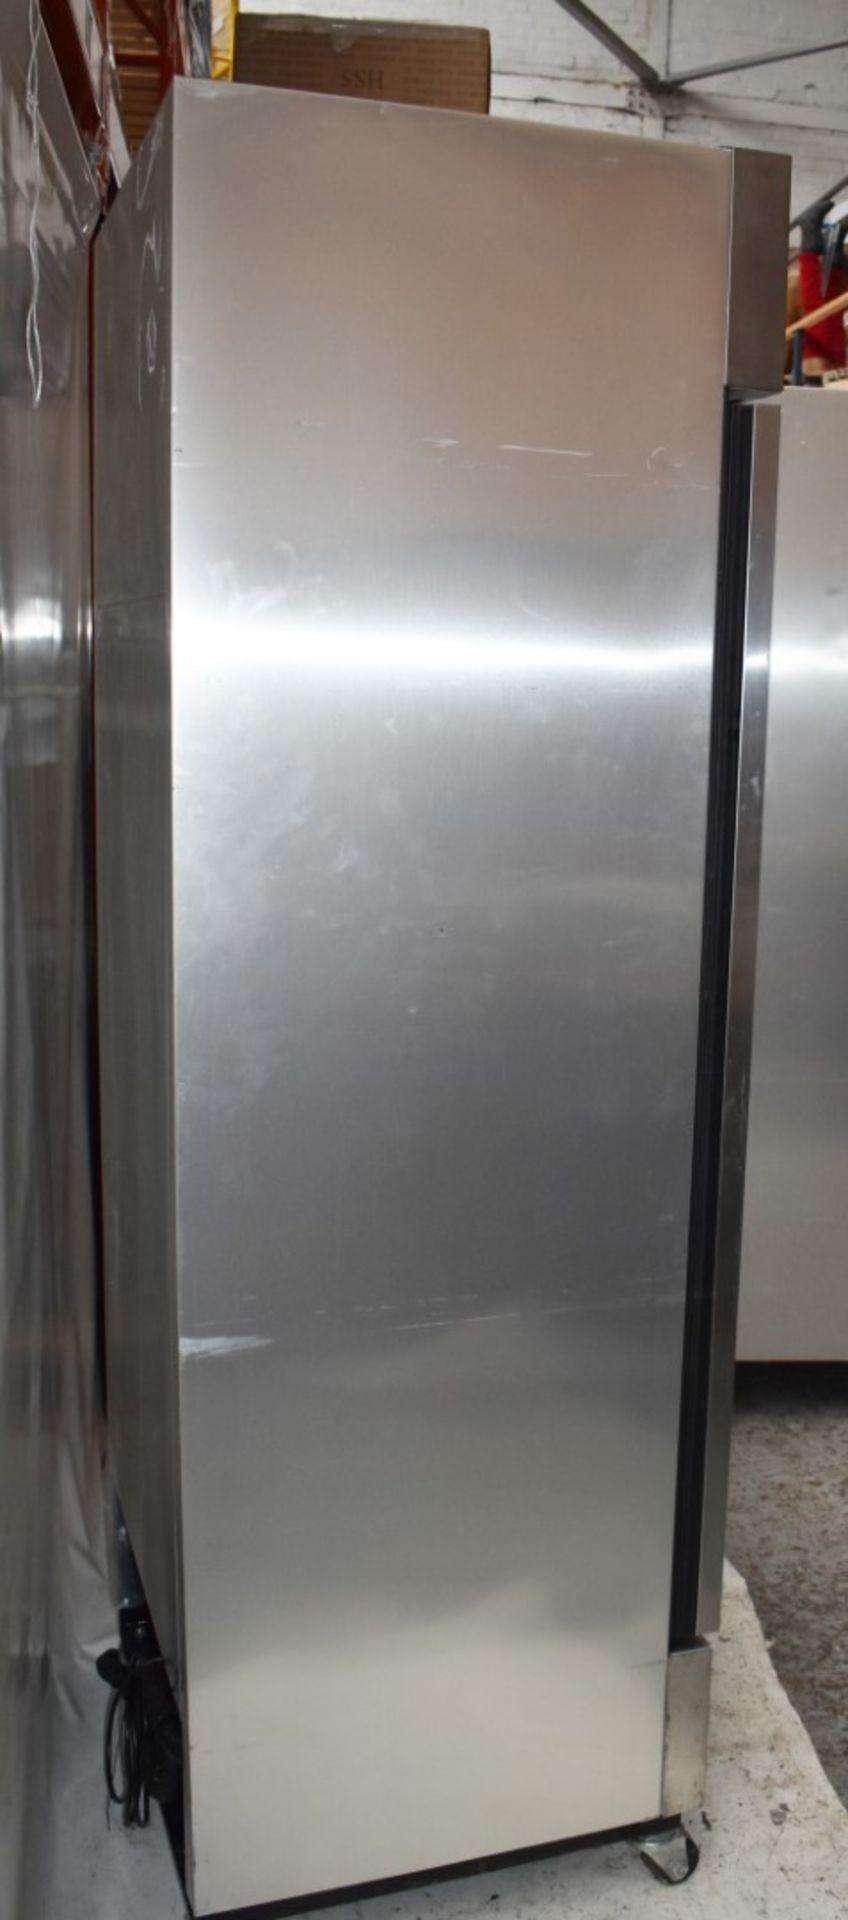 1 x True T-19FZ Upright Single Solid Door Freezer - Stainless Steel Finish With Aluminium Interior - - Image 8 of 9